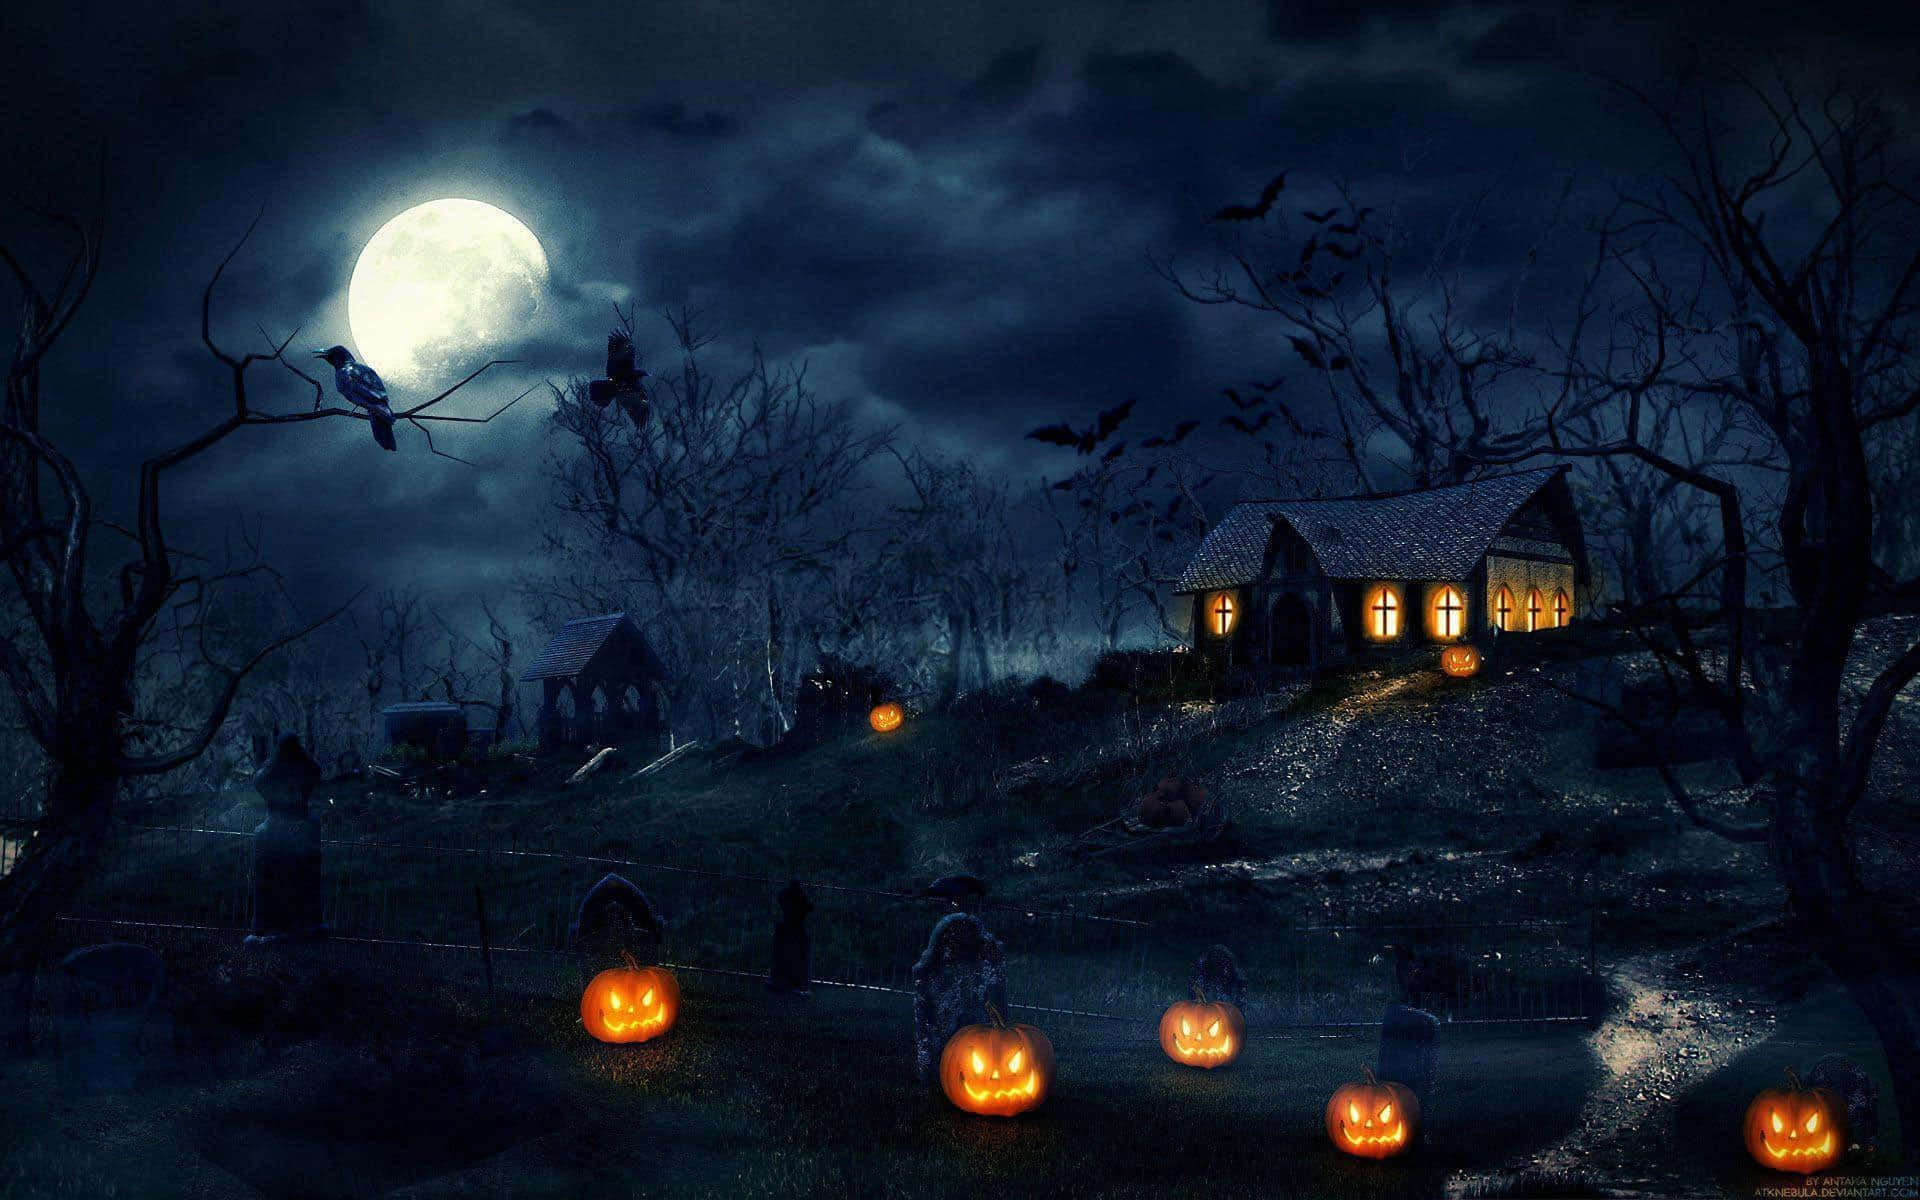 Spooky Boo! Get ready for a spooky Halloween!